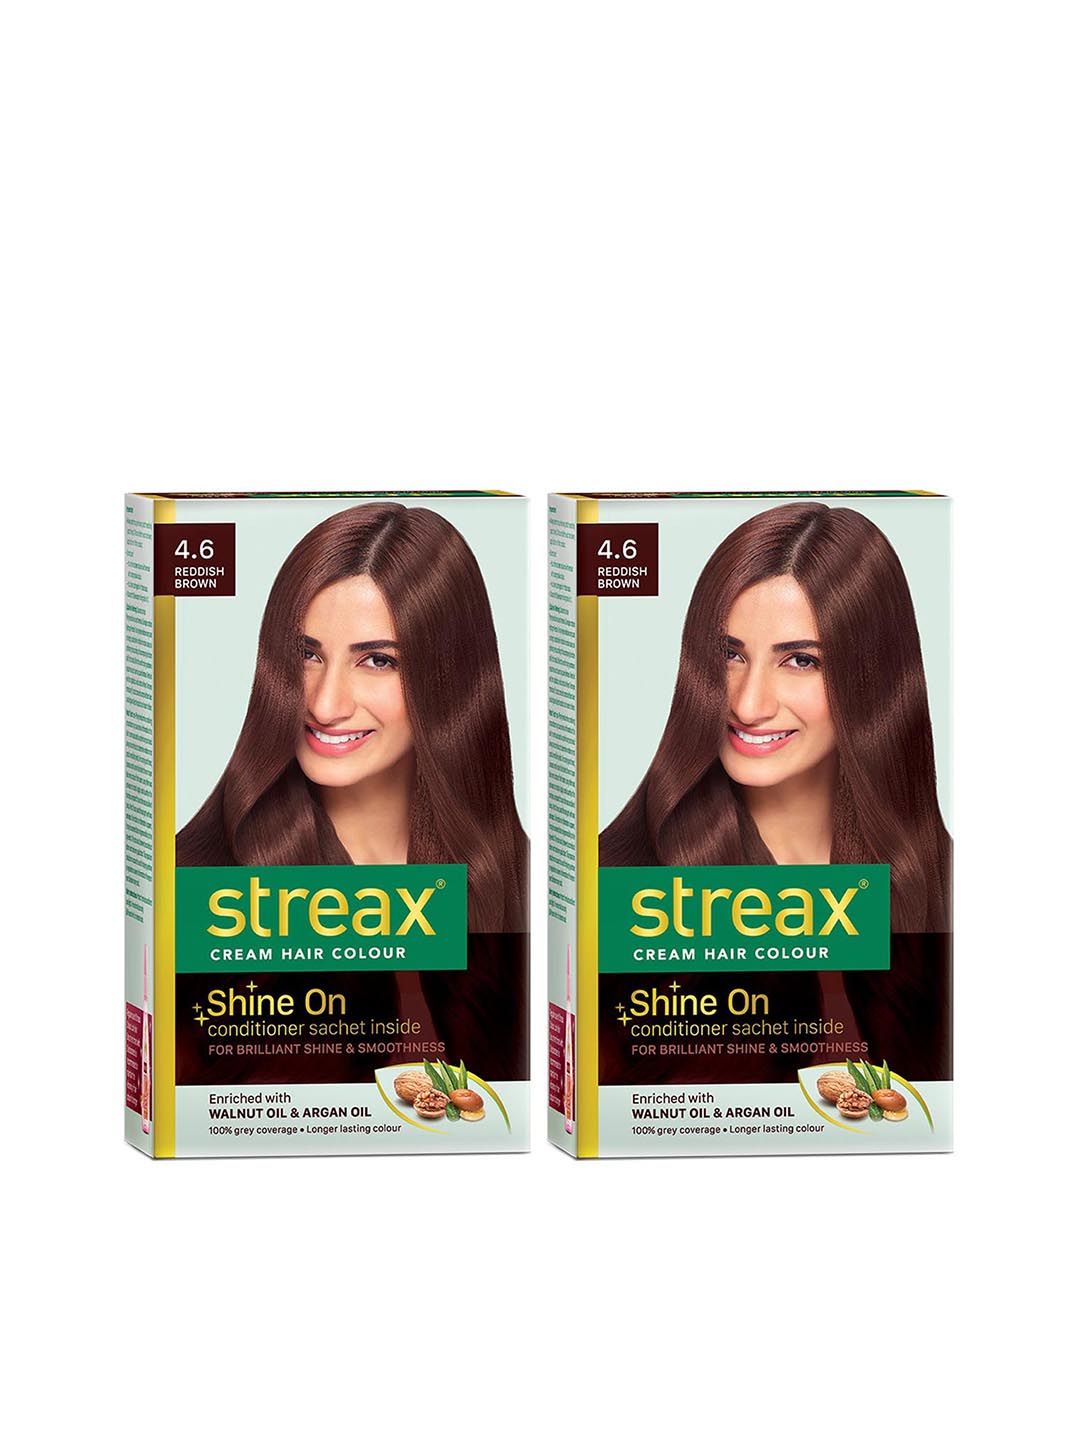 Streax Set of 2 Cream Hair Colour - 4.6 Reddish Brown 120ml Each Price in India